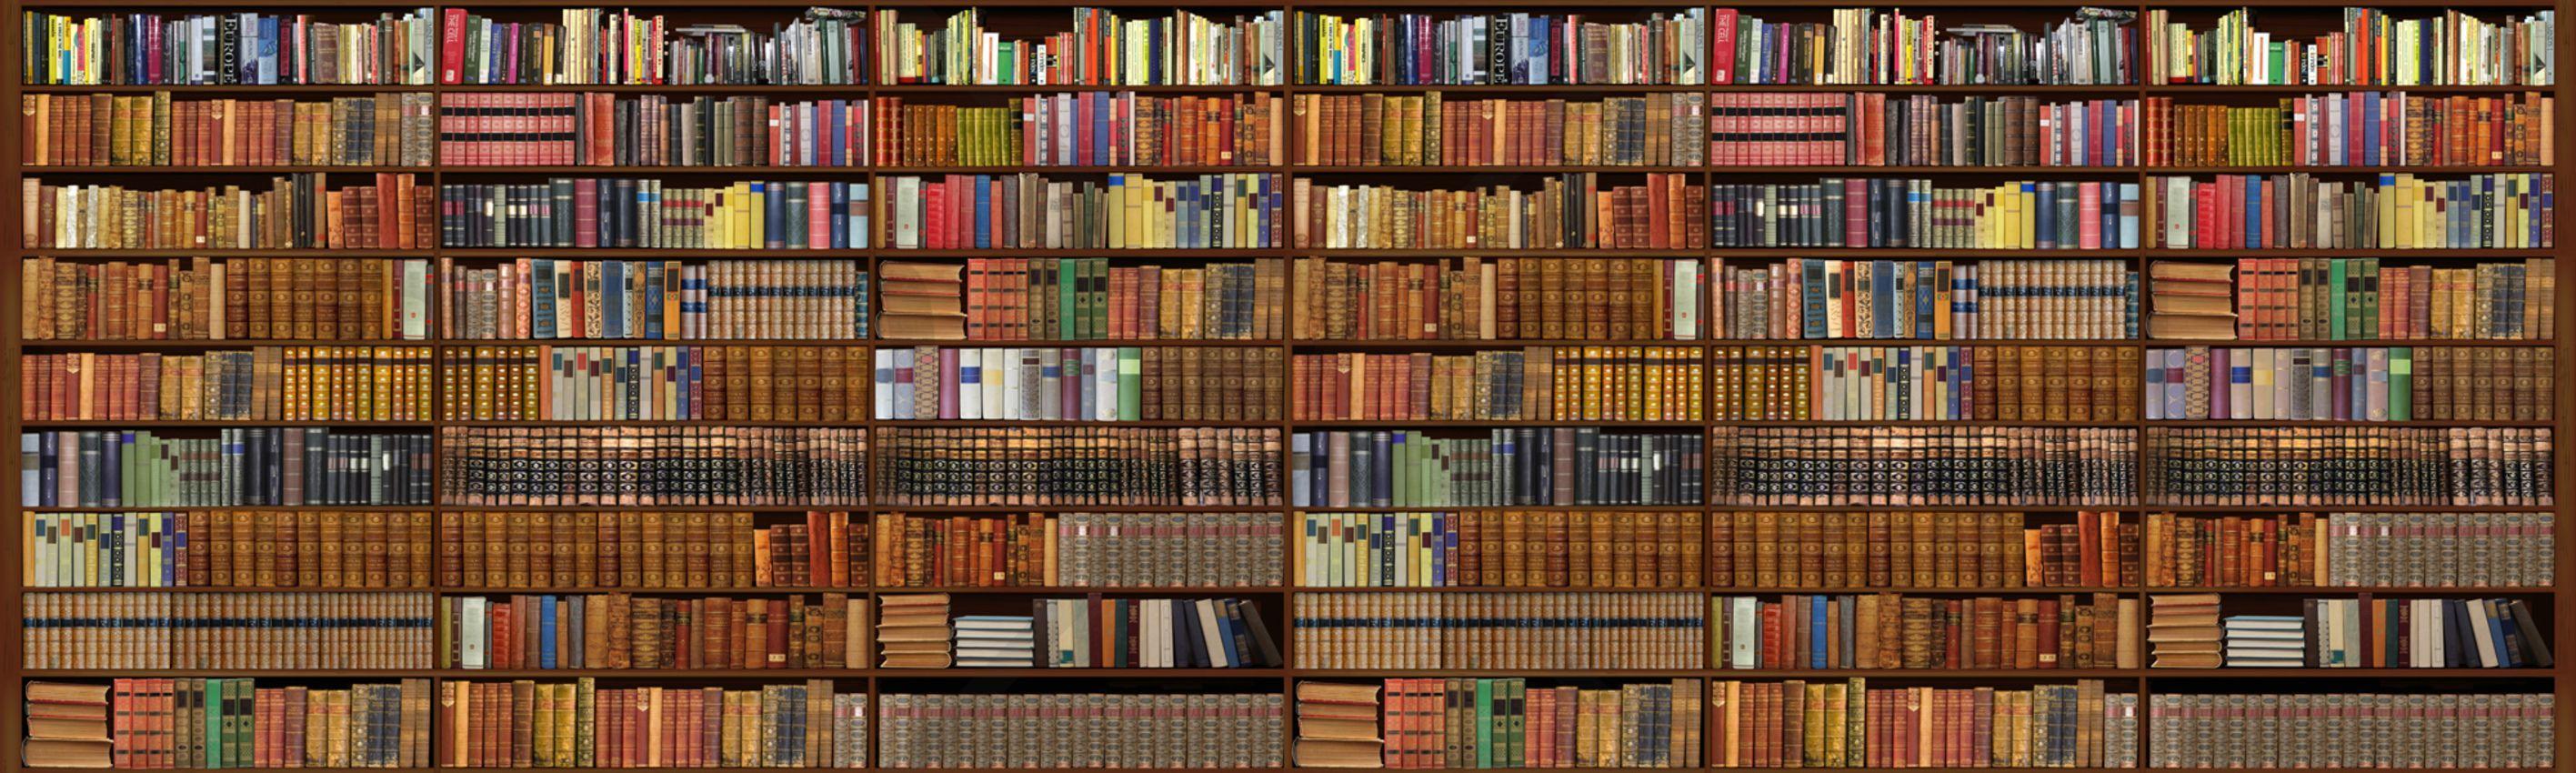 Bookshelf Wallpapers Top Free Bookshelf Backgrounds